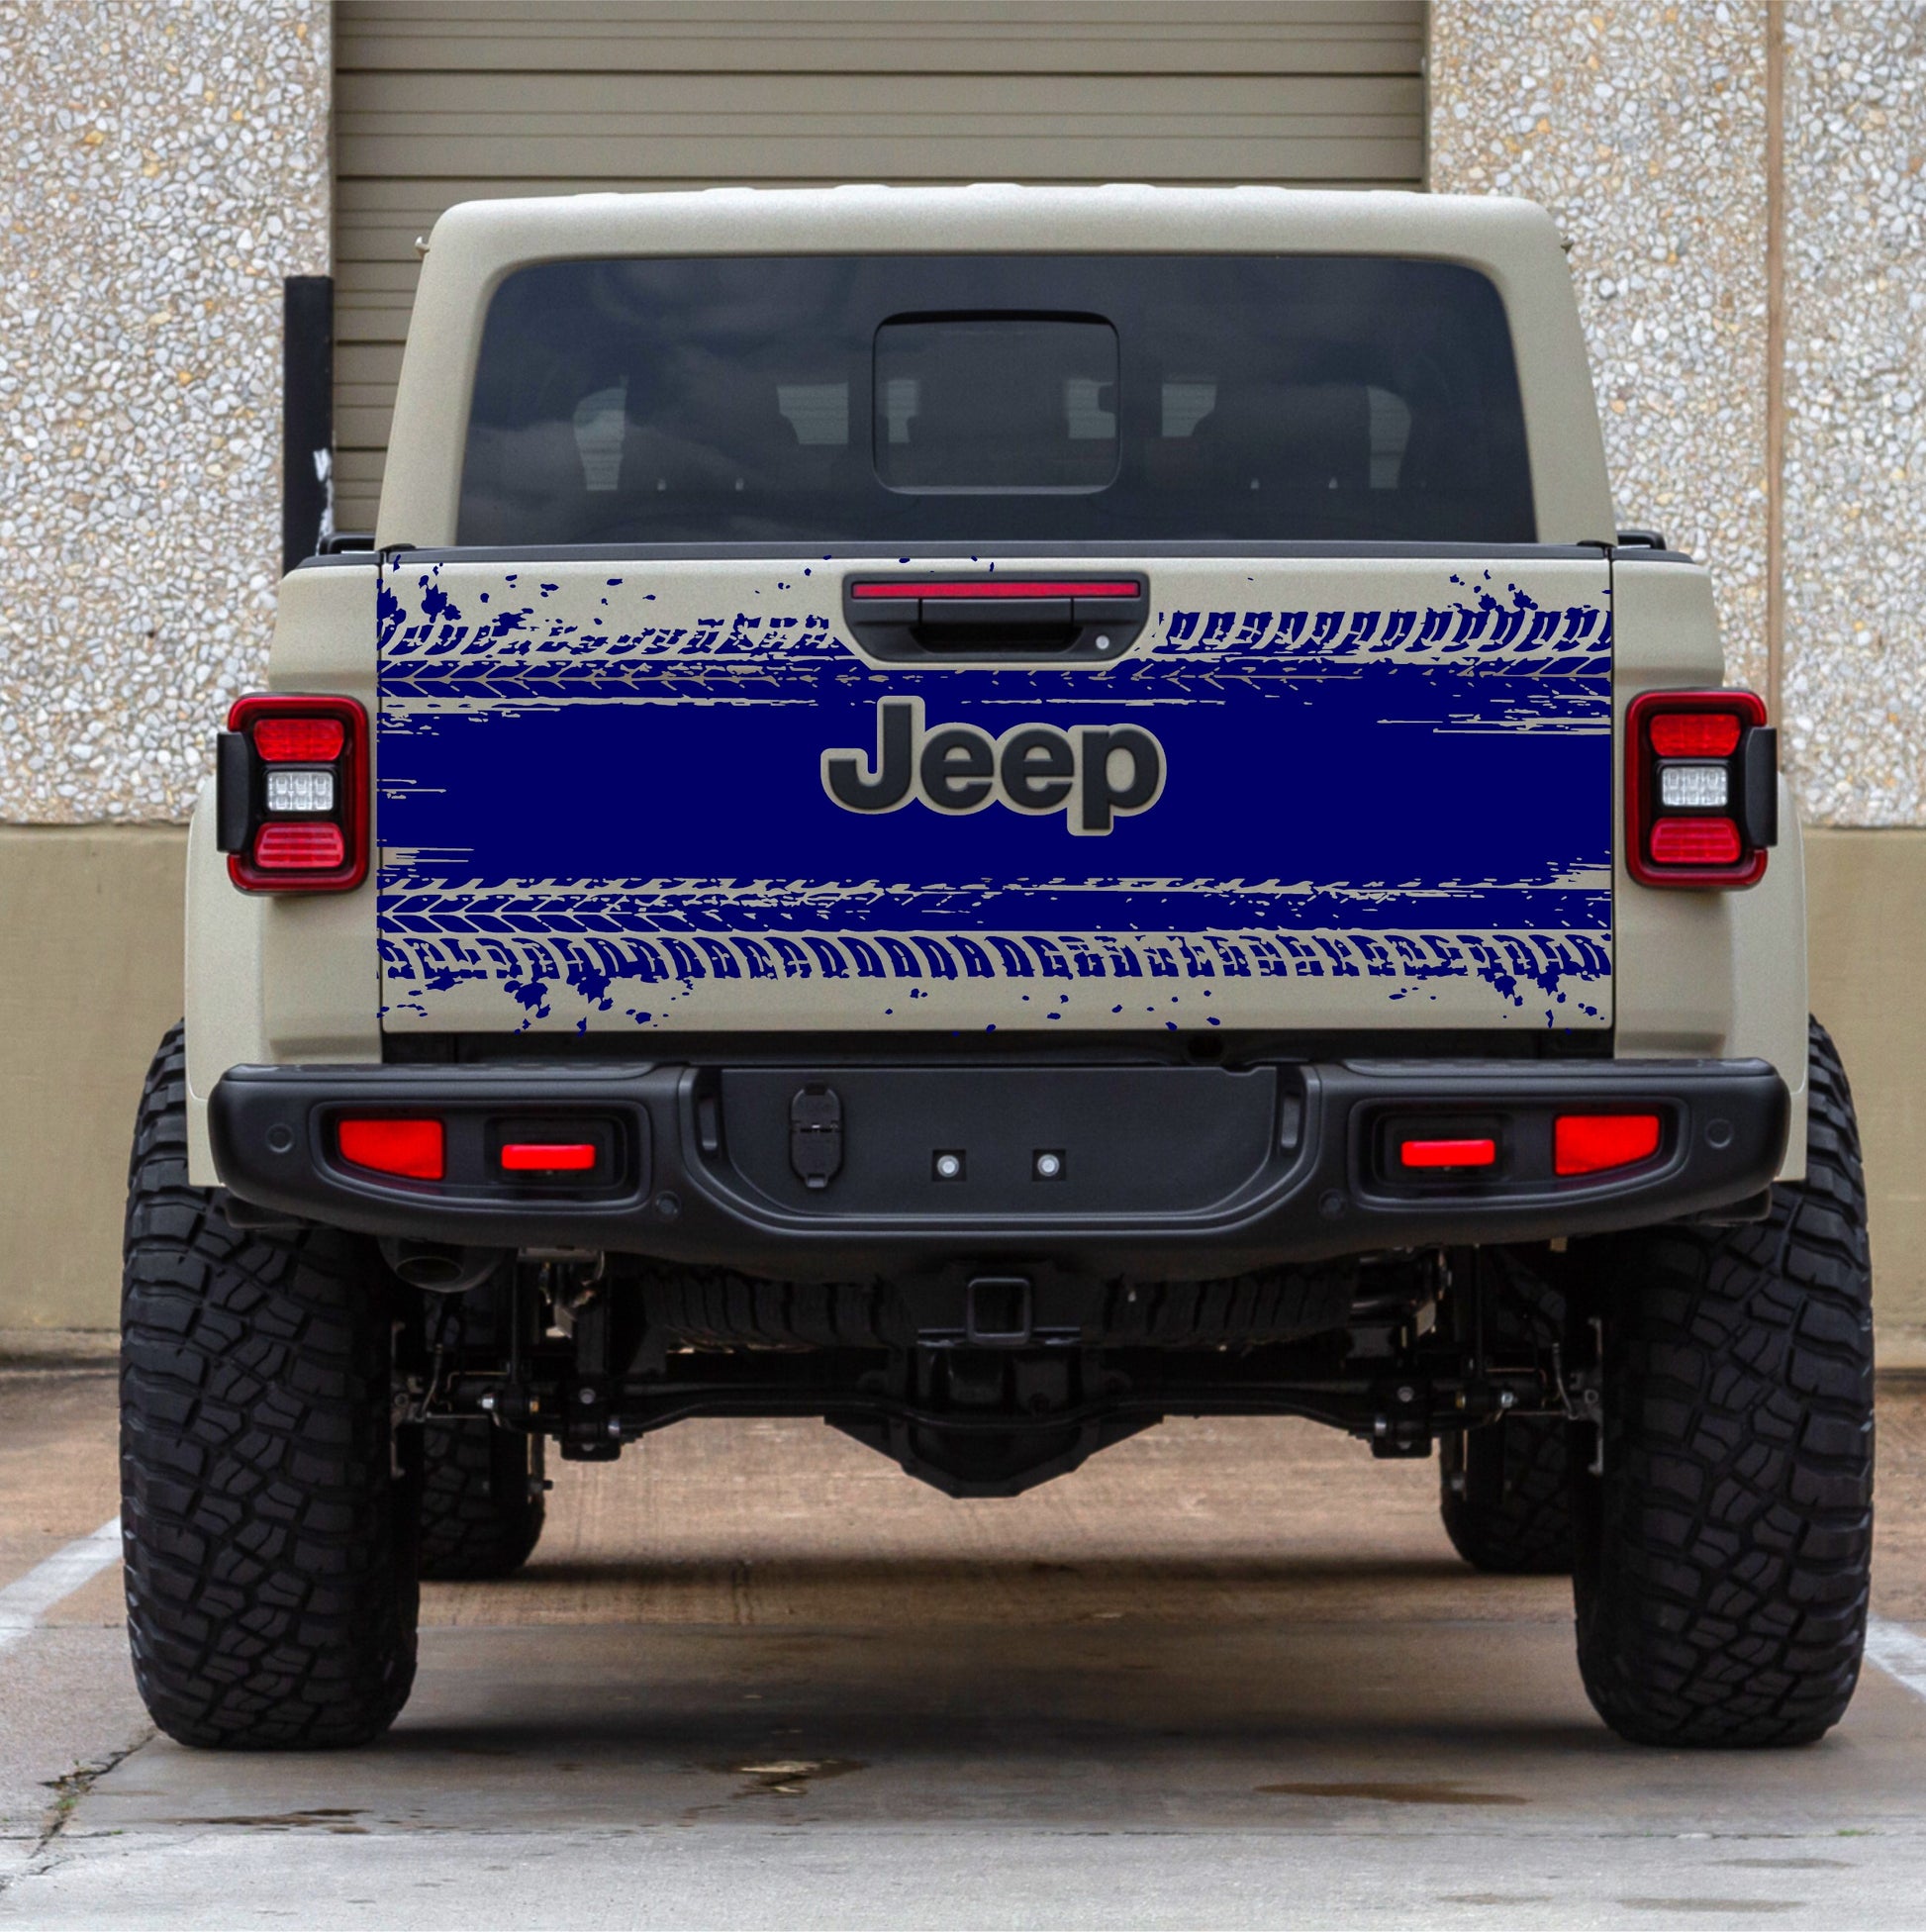 Mud Splash Tire Tracks Decals Stickers for Jeep Gladiator Truck's Tailgate